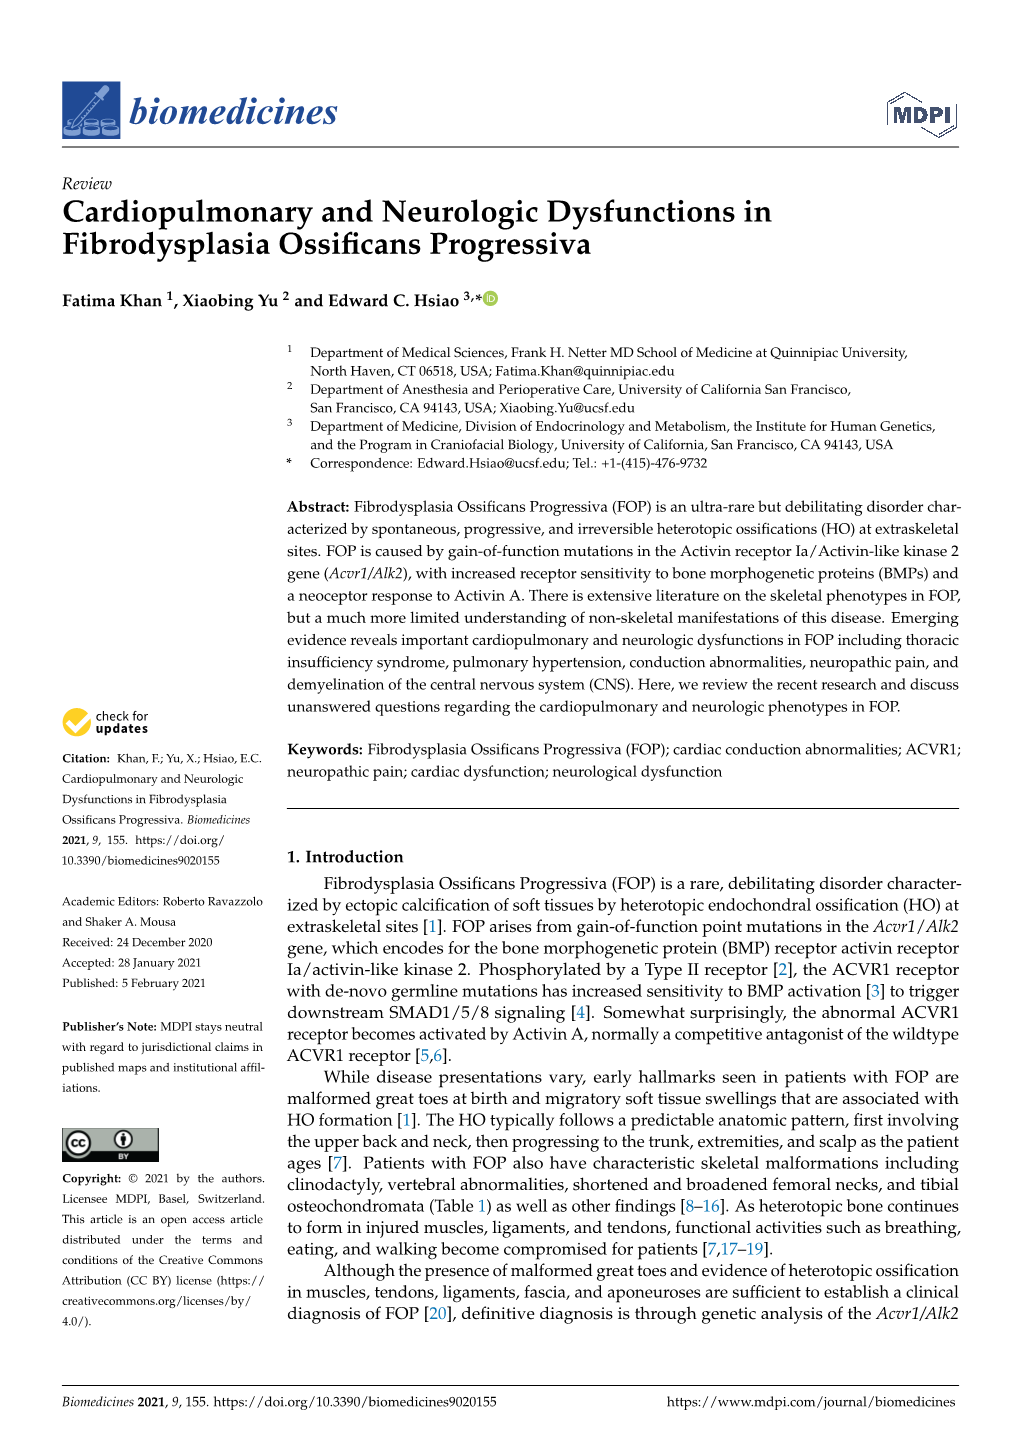 Cardiopulmonary and Neurologic Dysfunctions in Fibrodysplasia Ossificans Progressiva